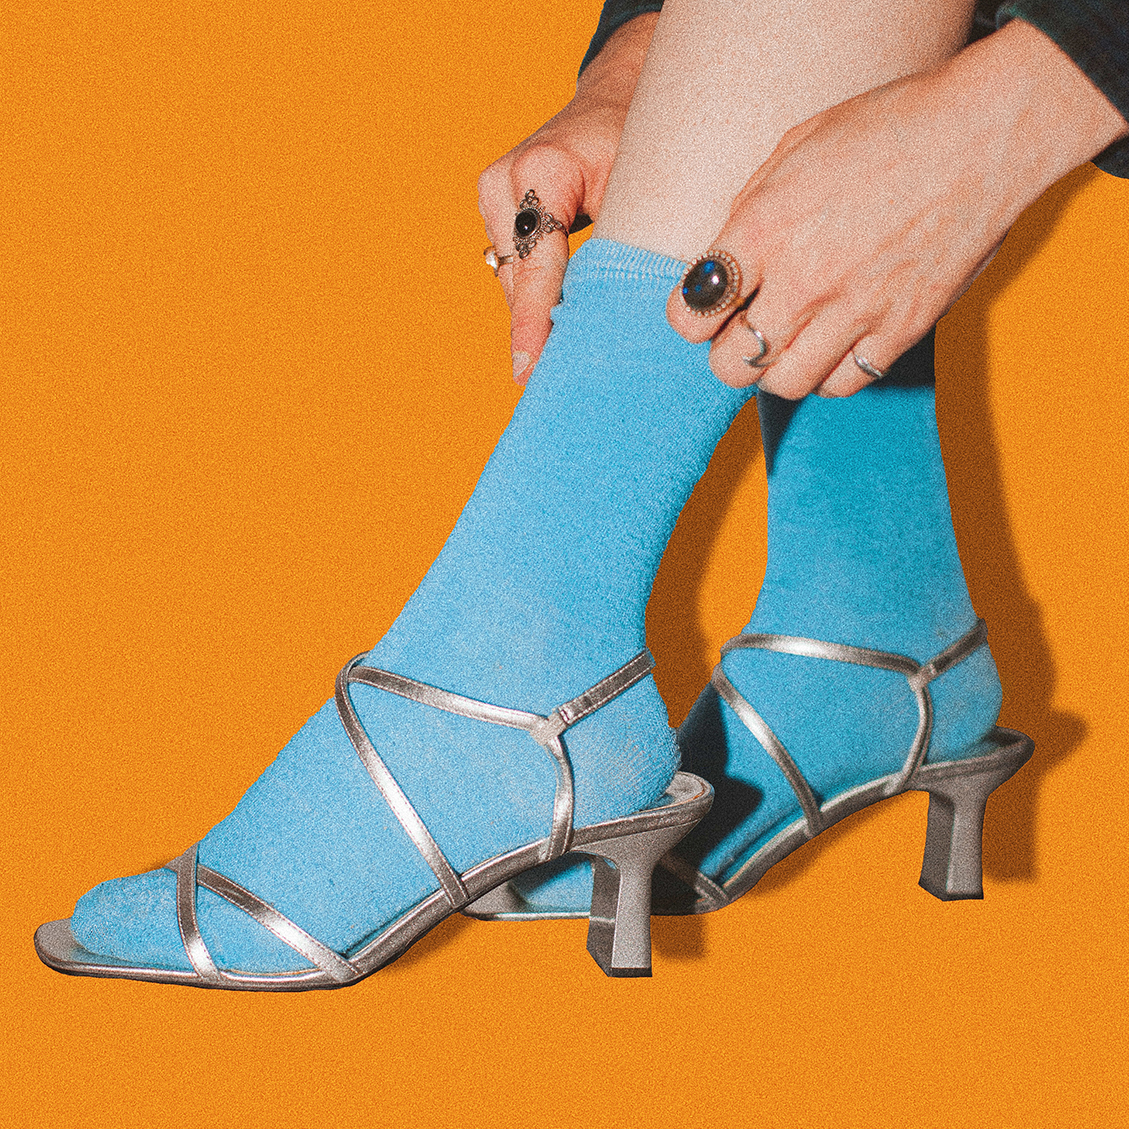 Zara Is Selling Heels With Built-in Socks for $70